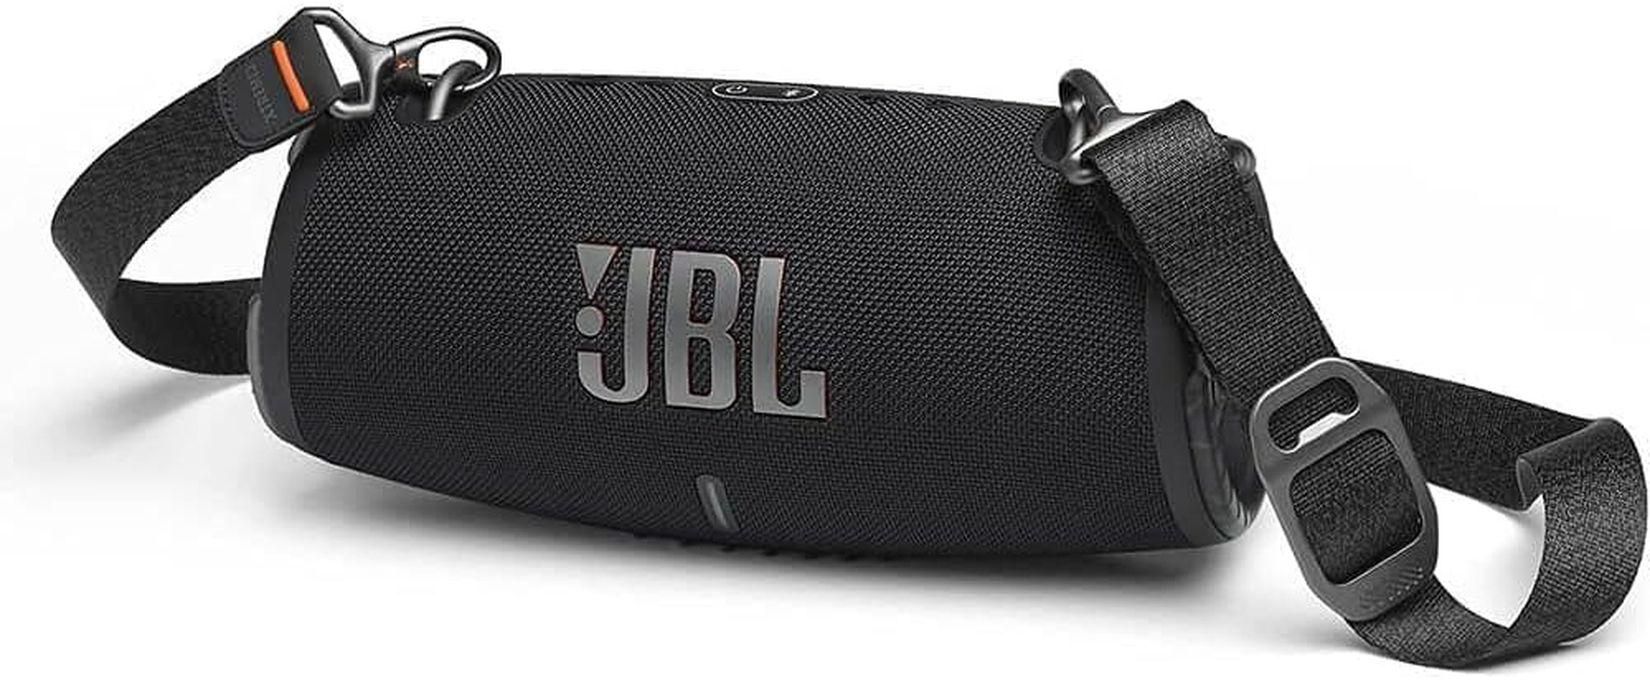 JBL Xtreme 3 Portable Waterproof Speaker With Massive JBL Original Pro Sound - Black